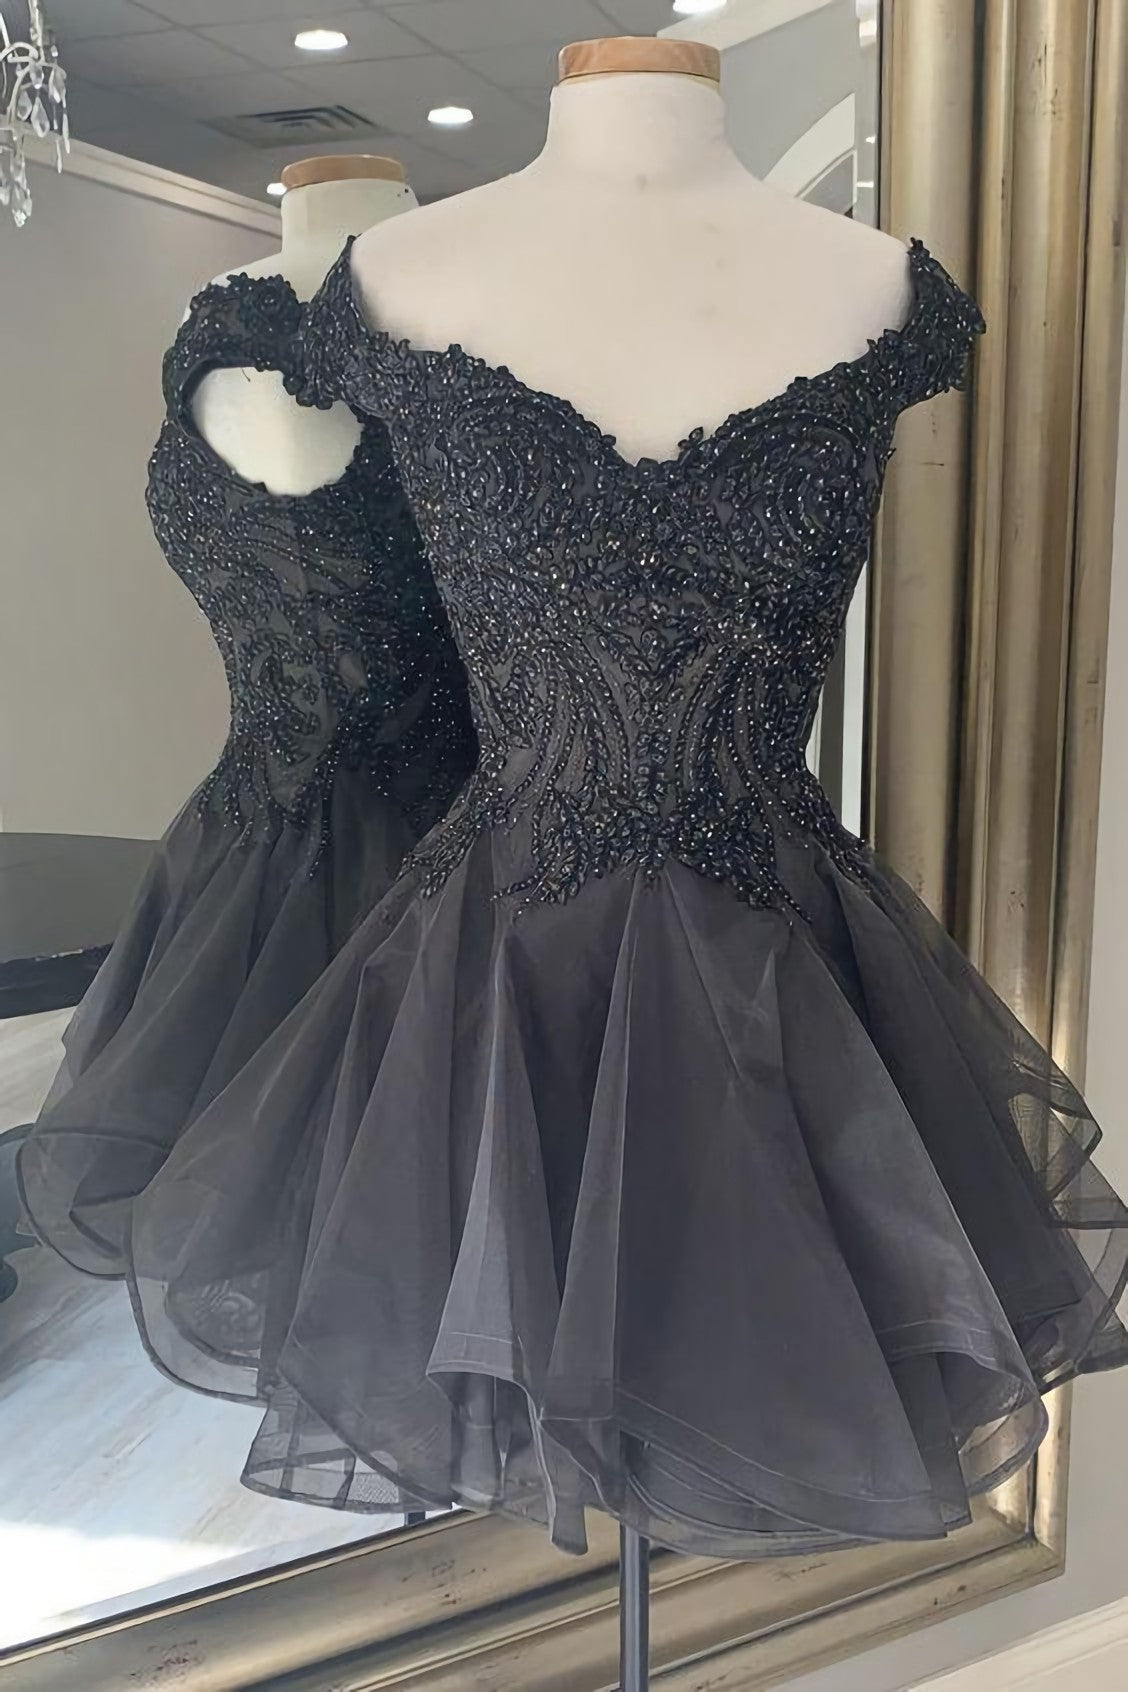 Prom Dress Under 211, Off The Shoulder Black Short Party Dress, Homecoming Dress